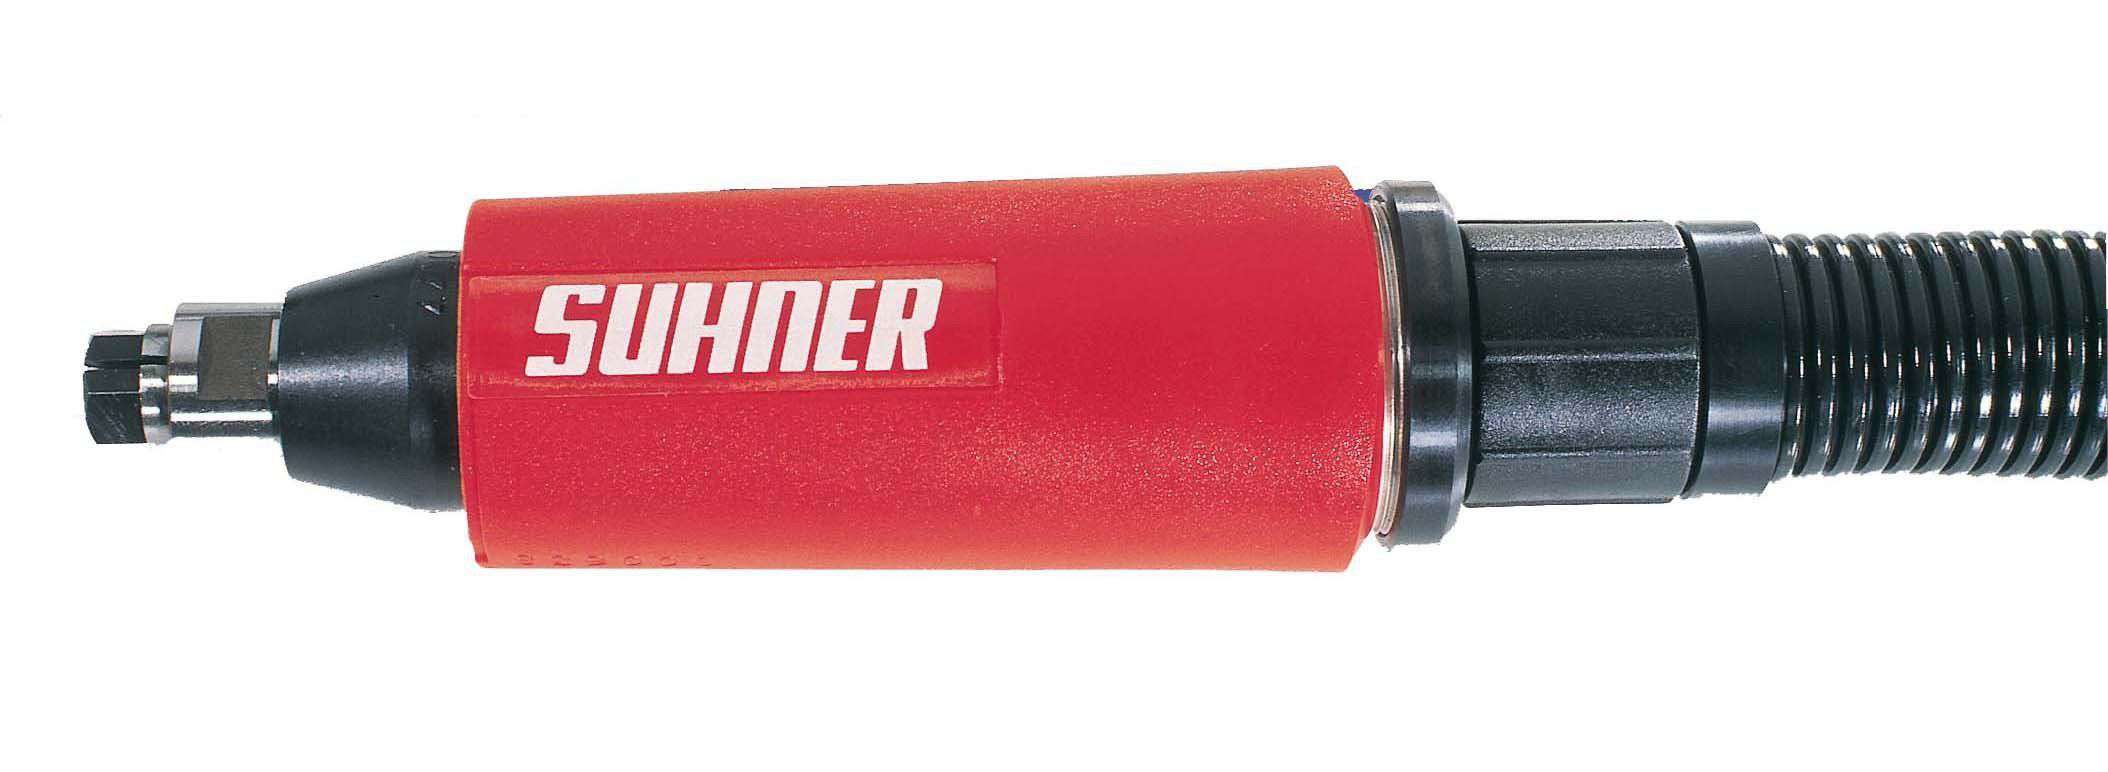 Suhner LSB 44-E/D Straight Grinder Ring Throttle 44000 RPM